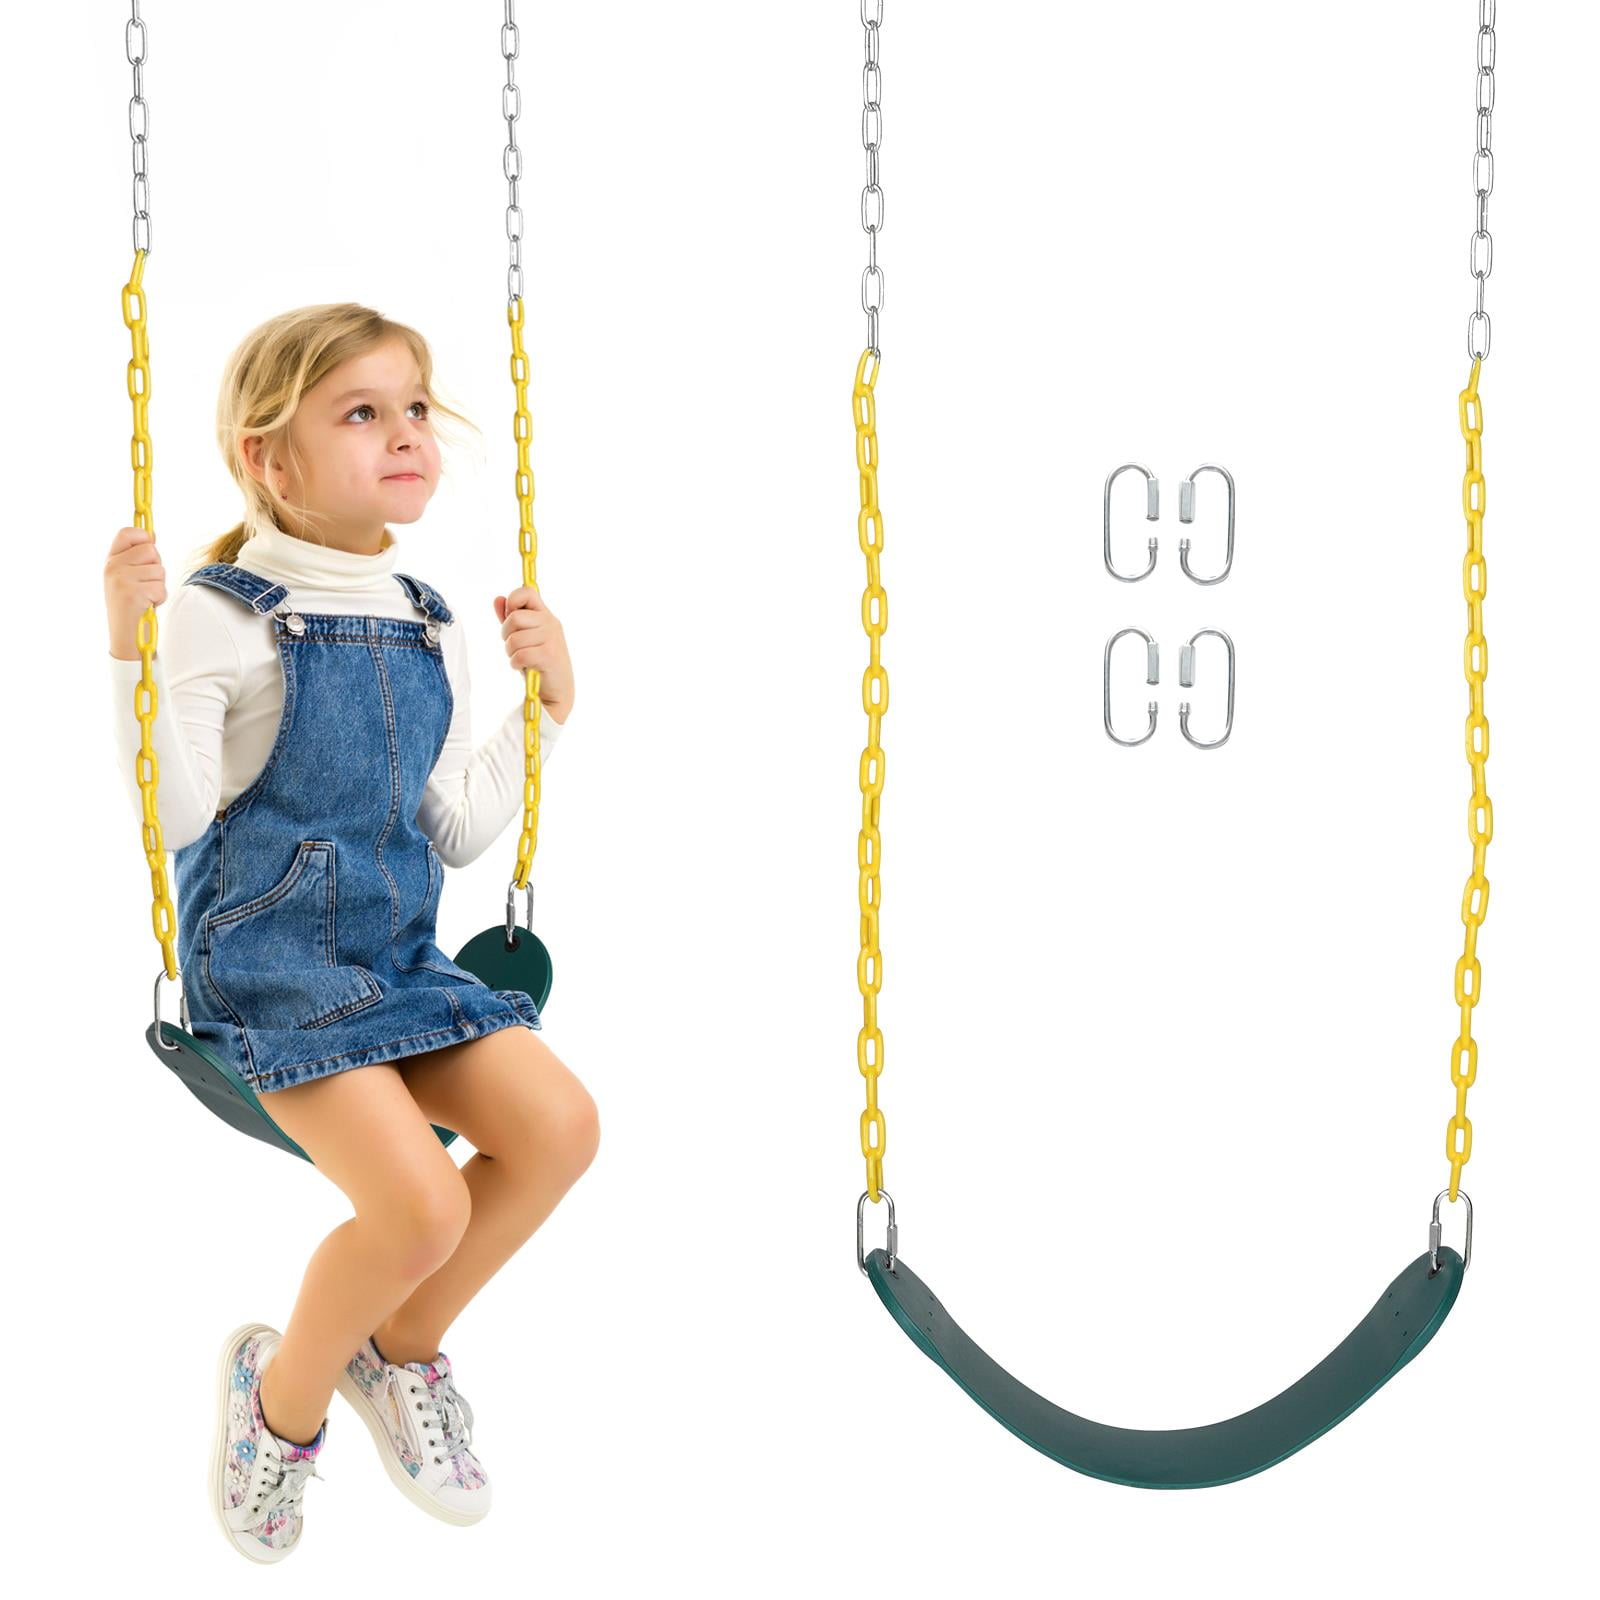 Pink Strap Swing Seat on Coated Chain Playground backyard Belt Swing Set DIY NEW 